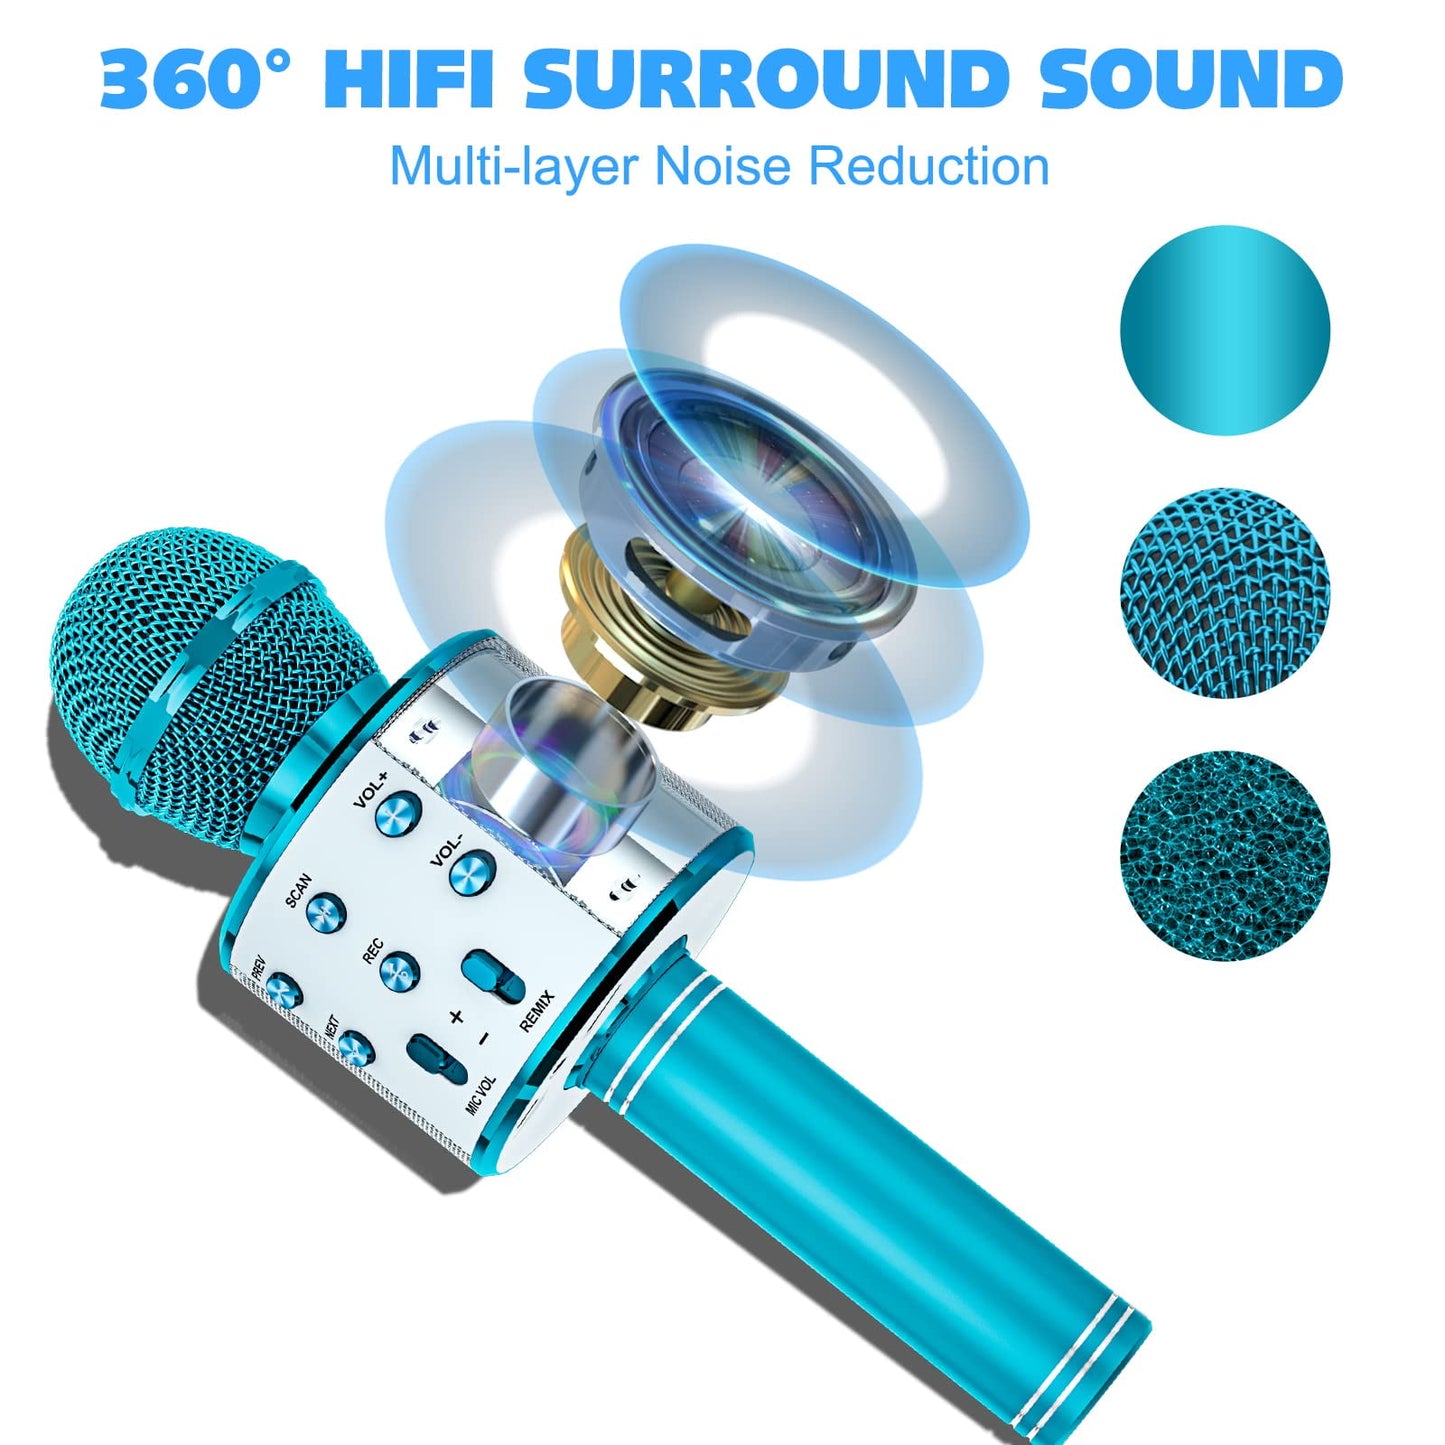 BONAOK 2 Pack Karaoke Microphone for Kids Adults, Wireless Bluetooth Karaoke Microphone for Singing, Portable Handheld Mic Speaker Machine,Birthday Gifts Toys for Girls Boys Teens(Blue & Purple)